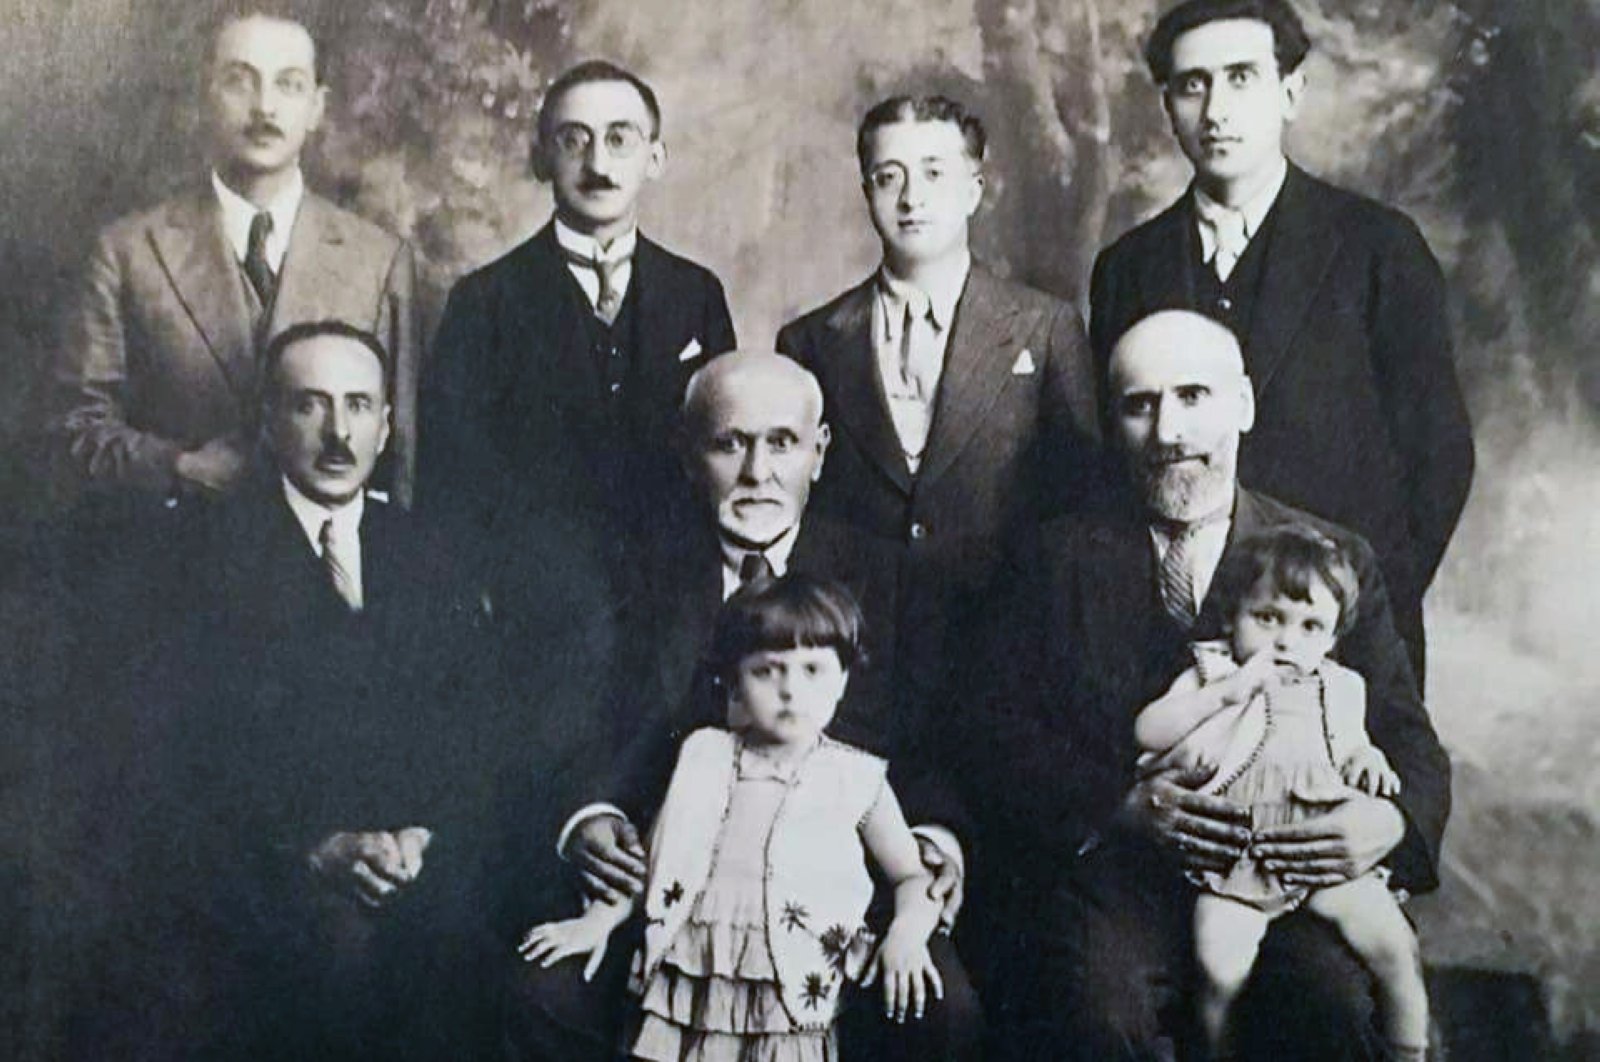 Standing from left to right, Mahir İz, Ali Nihat Tarlan, Abdülbaki Gölpınarlı, Şeyh Sadettin Nüzhet Ergün and sitting from left to right, Abdülbaki Baykara, Ömer Ferid Kam and Tahir Olgun.